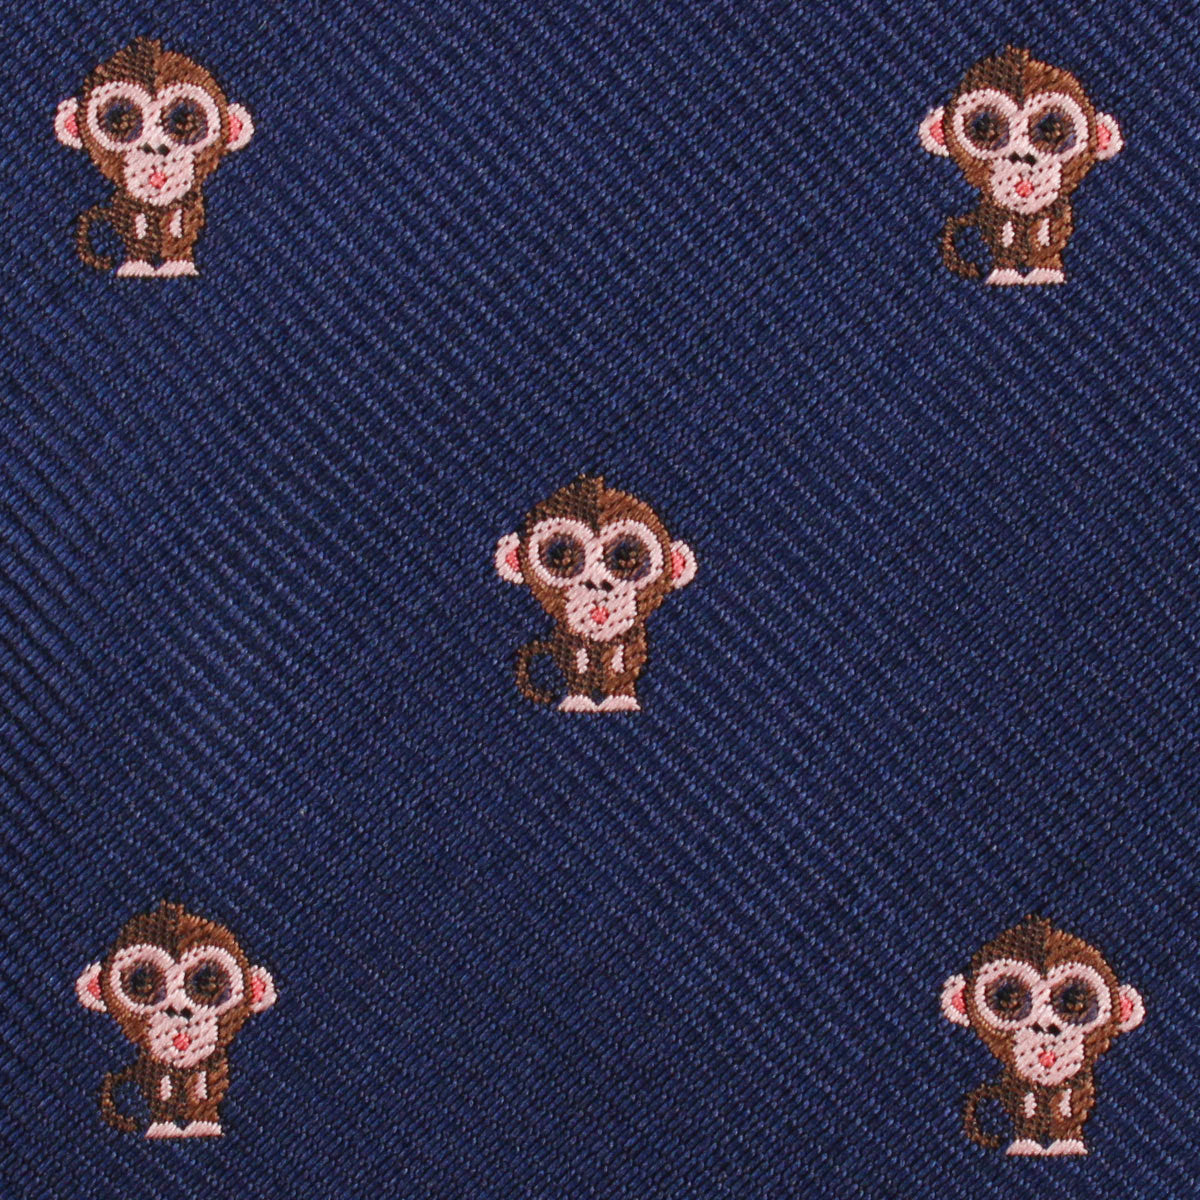 Monkey Fabric Necktie